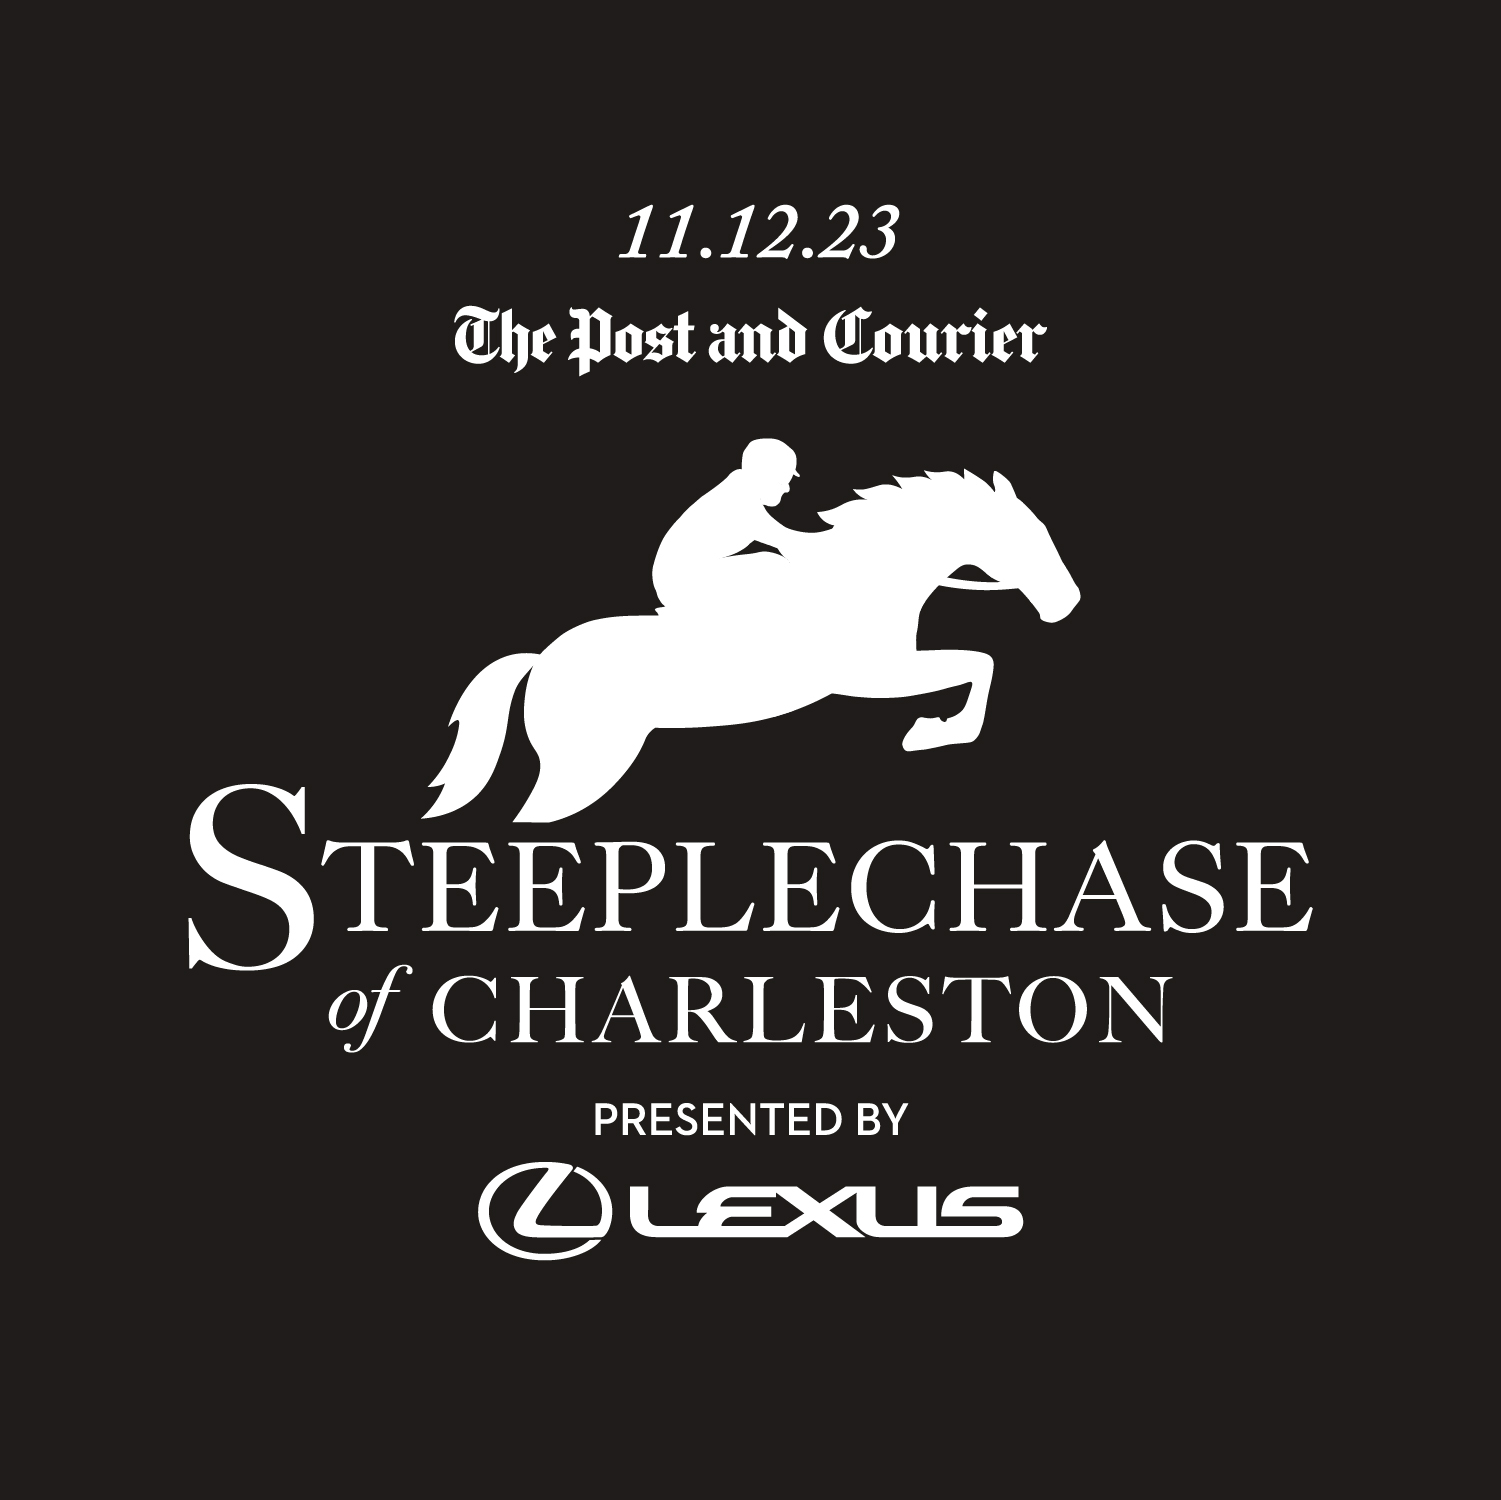 Steeplechase of Charleston